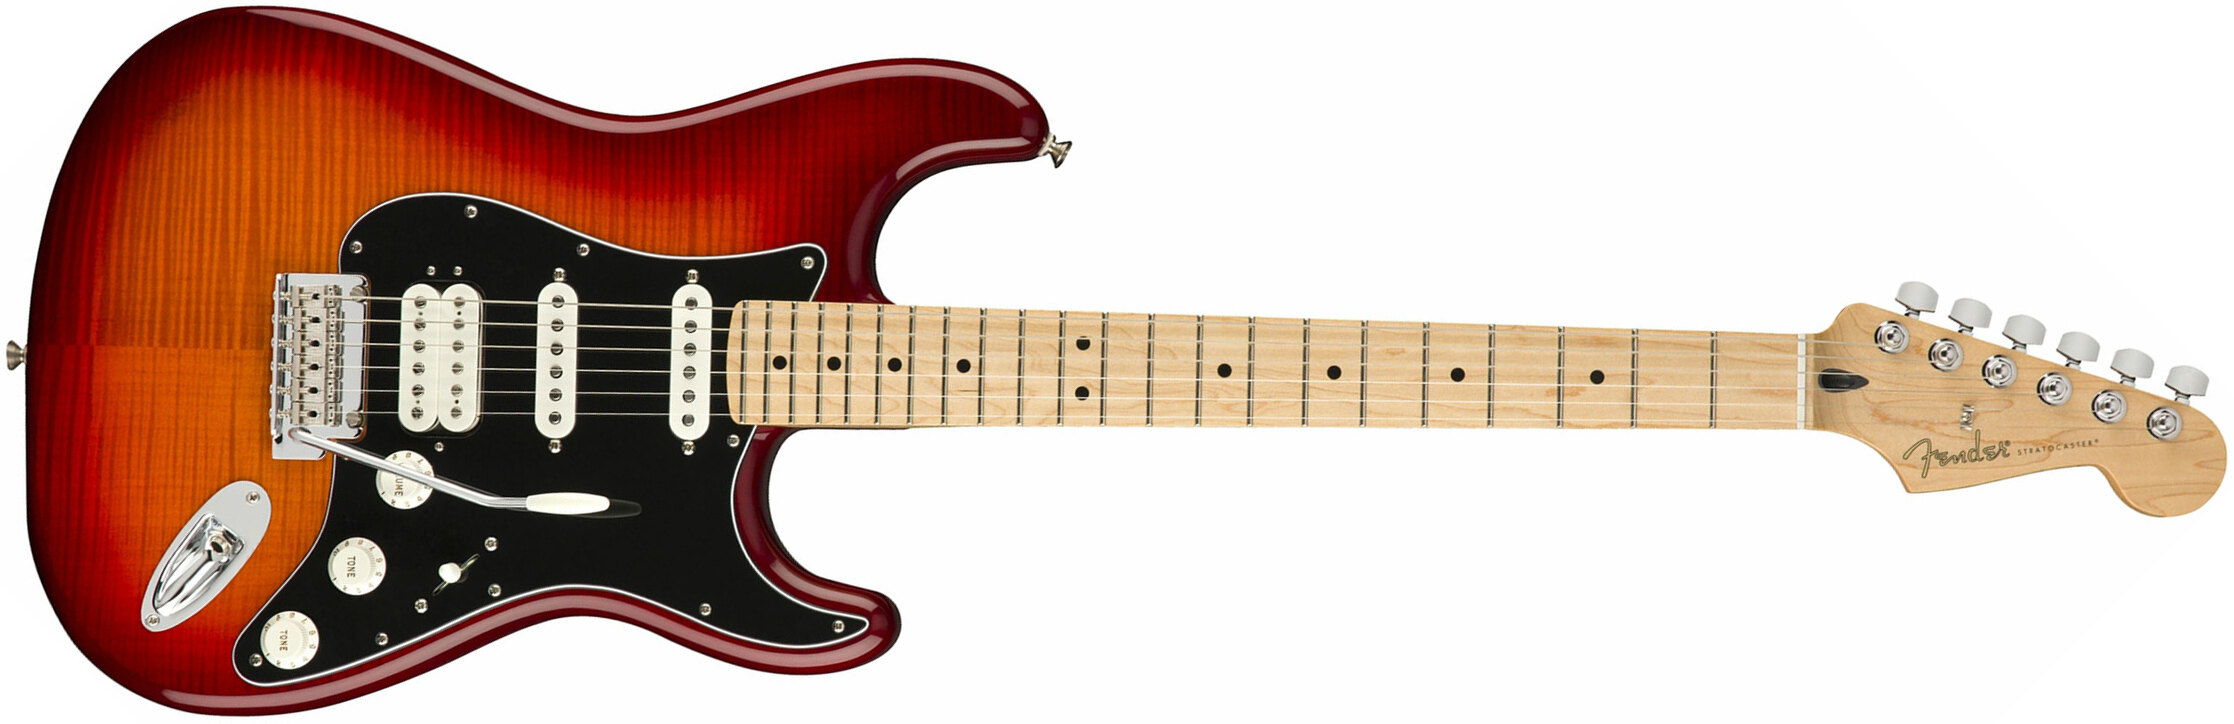 Fender Strat Player Plus Top Mex Hss Mn - Aged Cherry Burst - E-Gitarre in Str-Form - Main picture